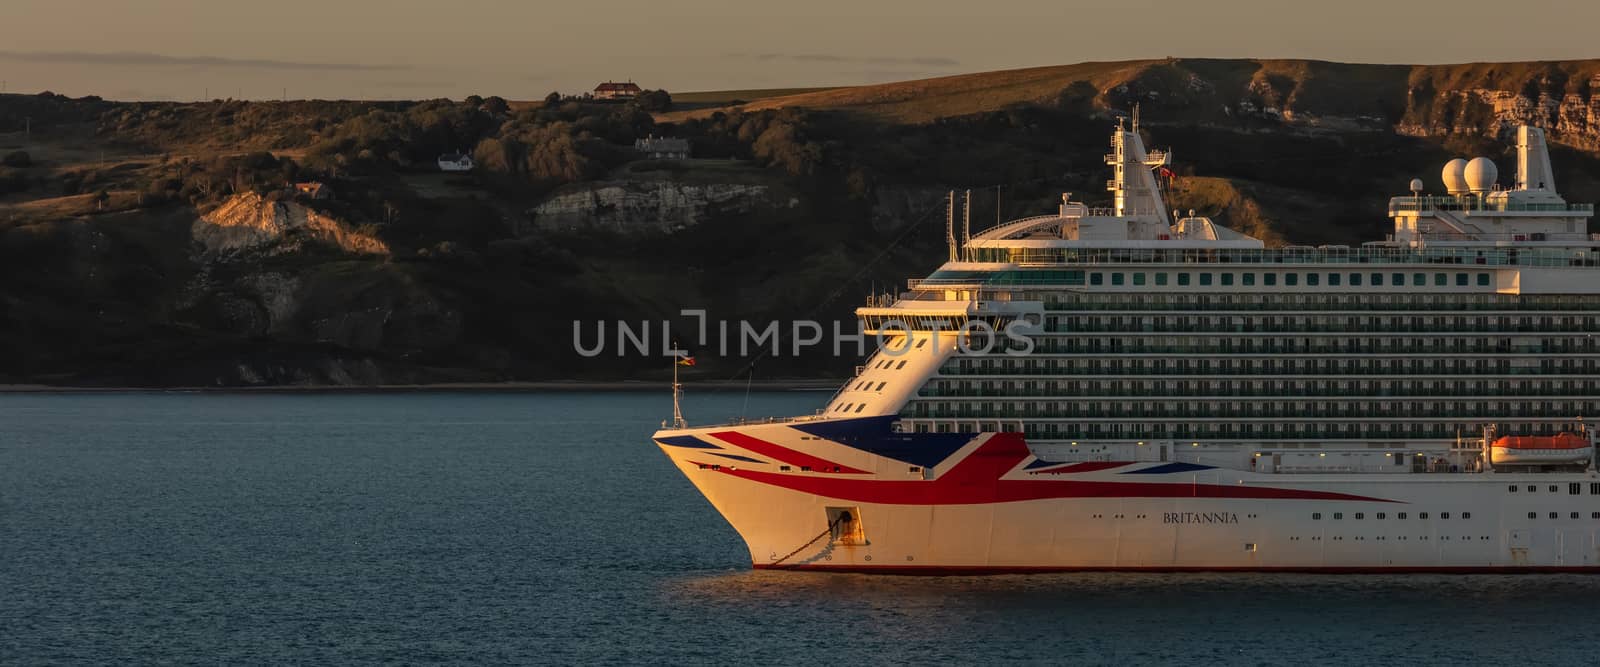 Weymouth Bay, United Kingdom - July 6, 2020: Beautiful panoramic shot of P&O cruise ship Britannia anchored in Weymouth Bay at sunset.